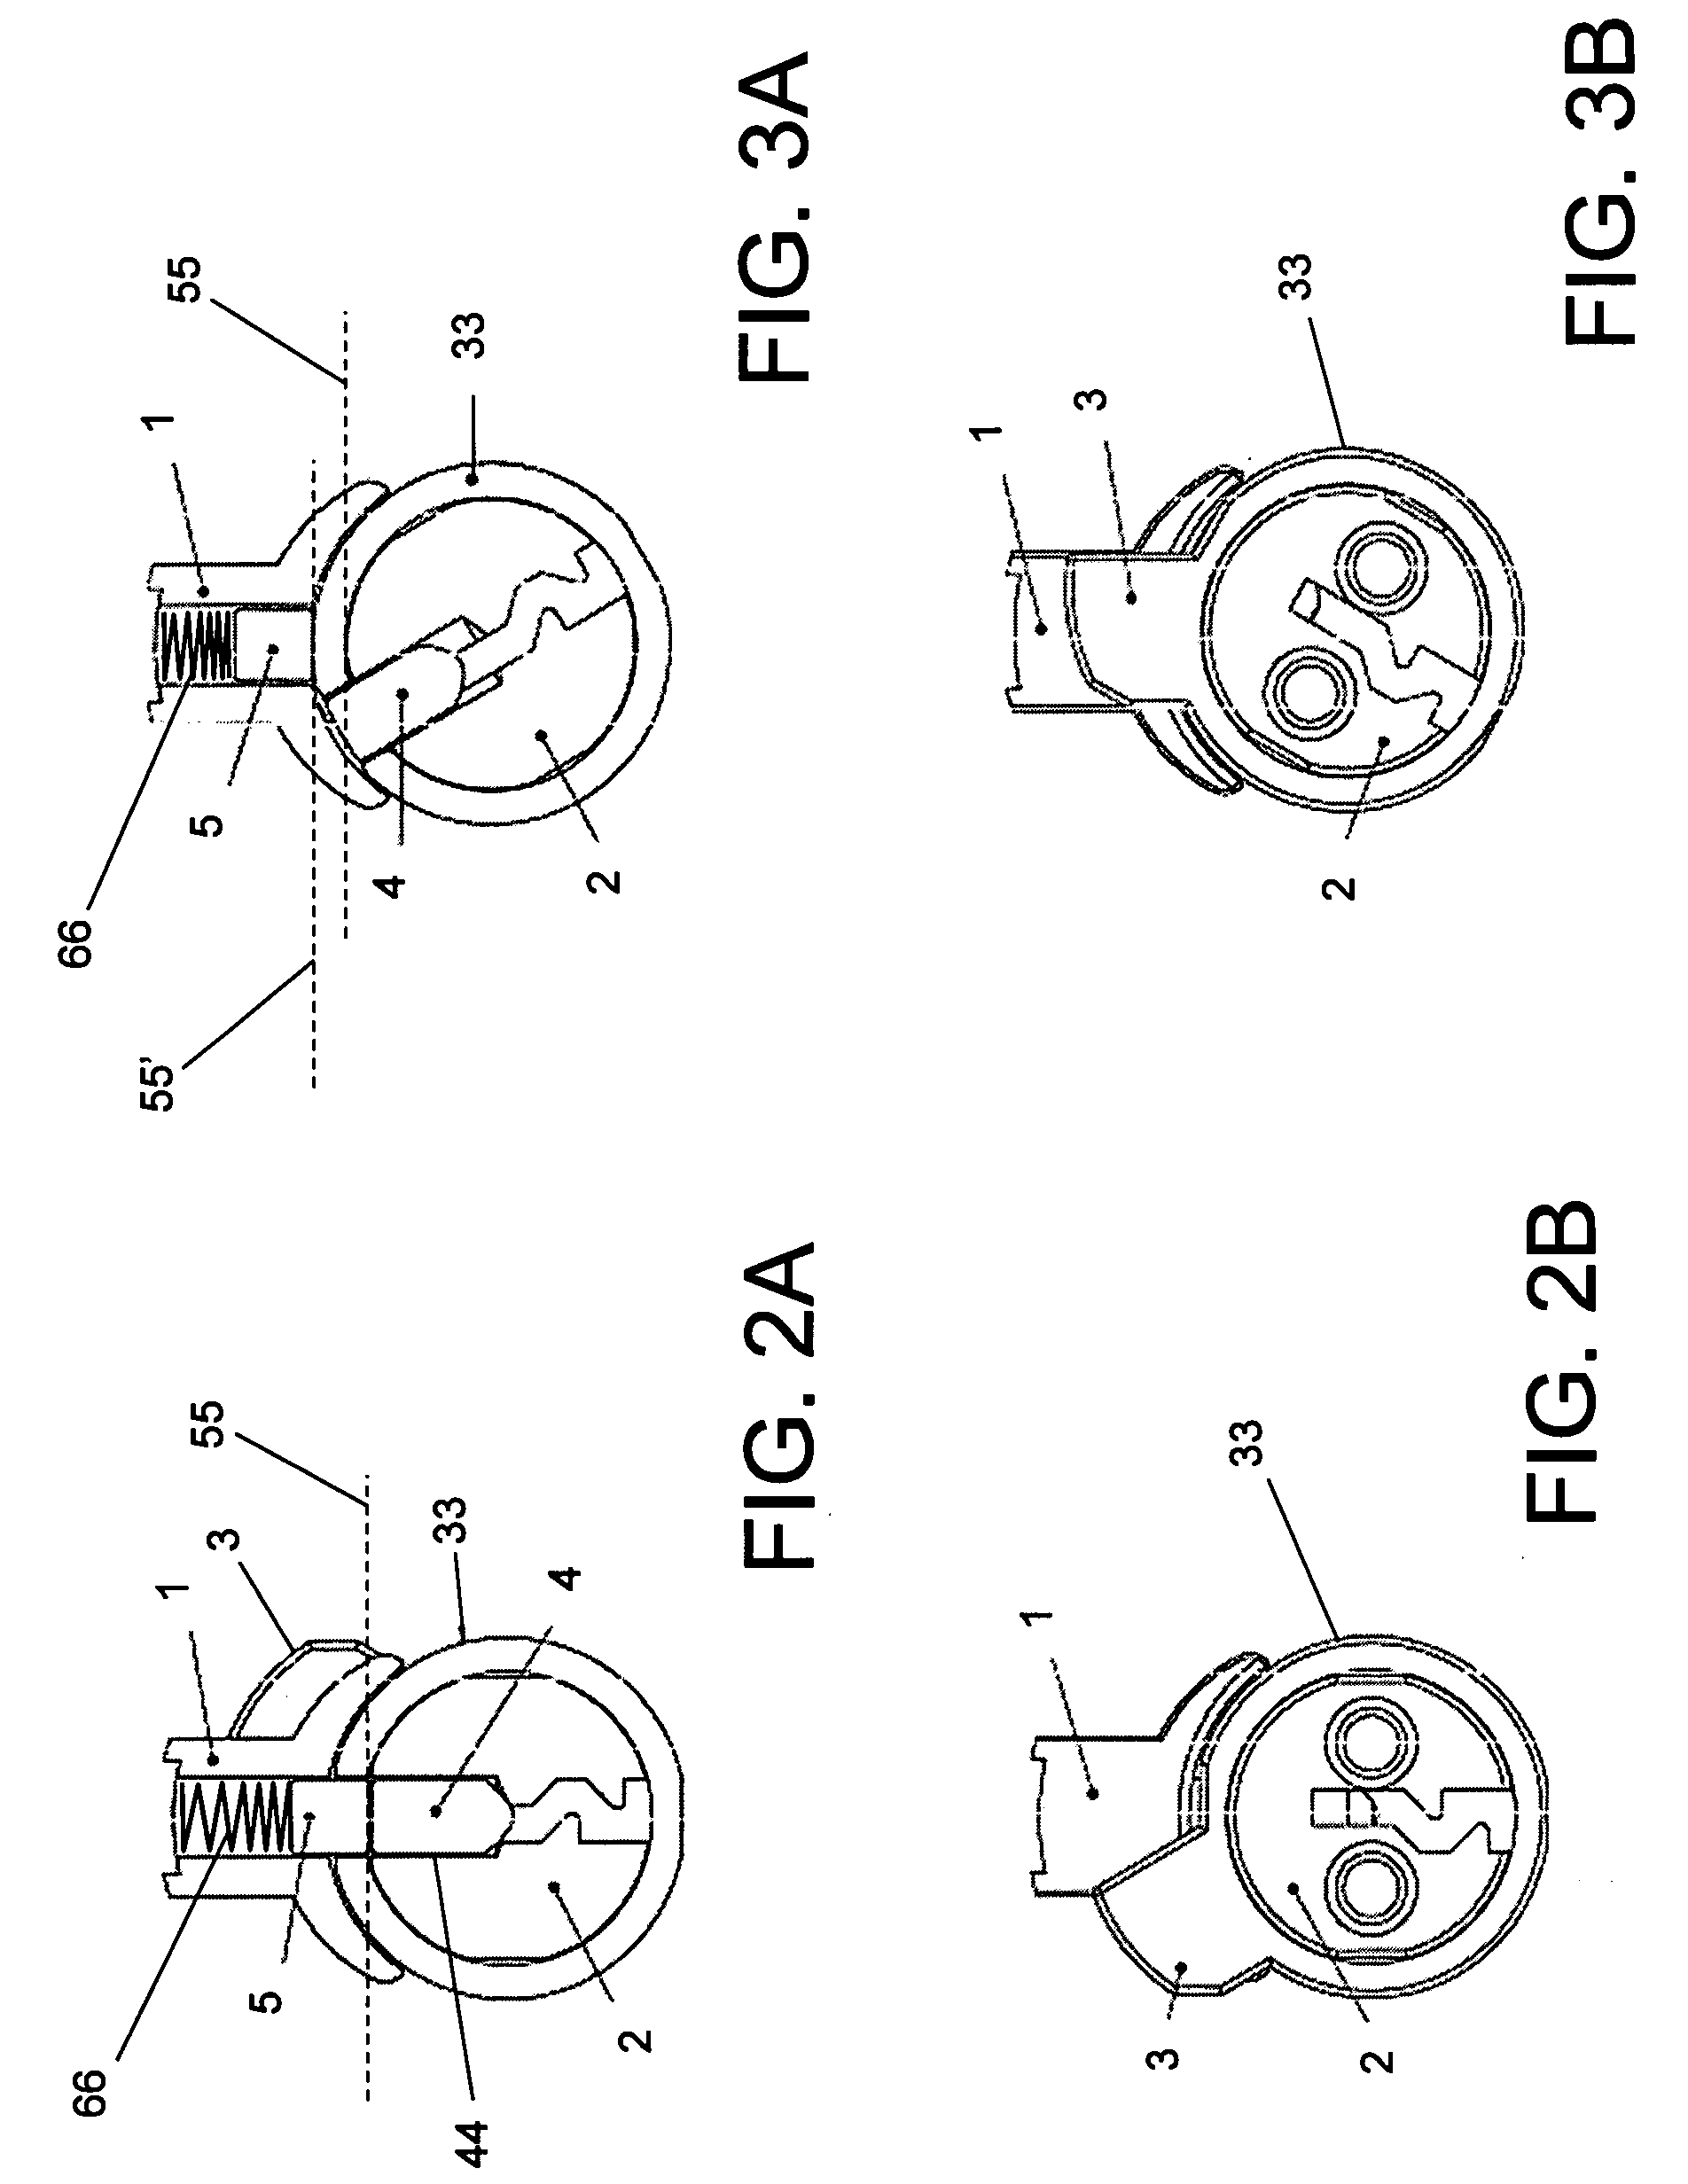 Key operated pin tumbler locks and methodology